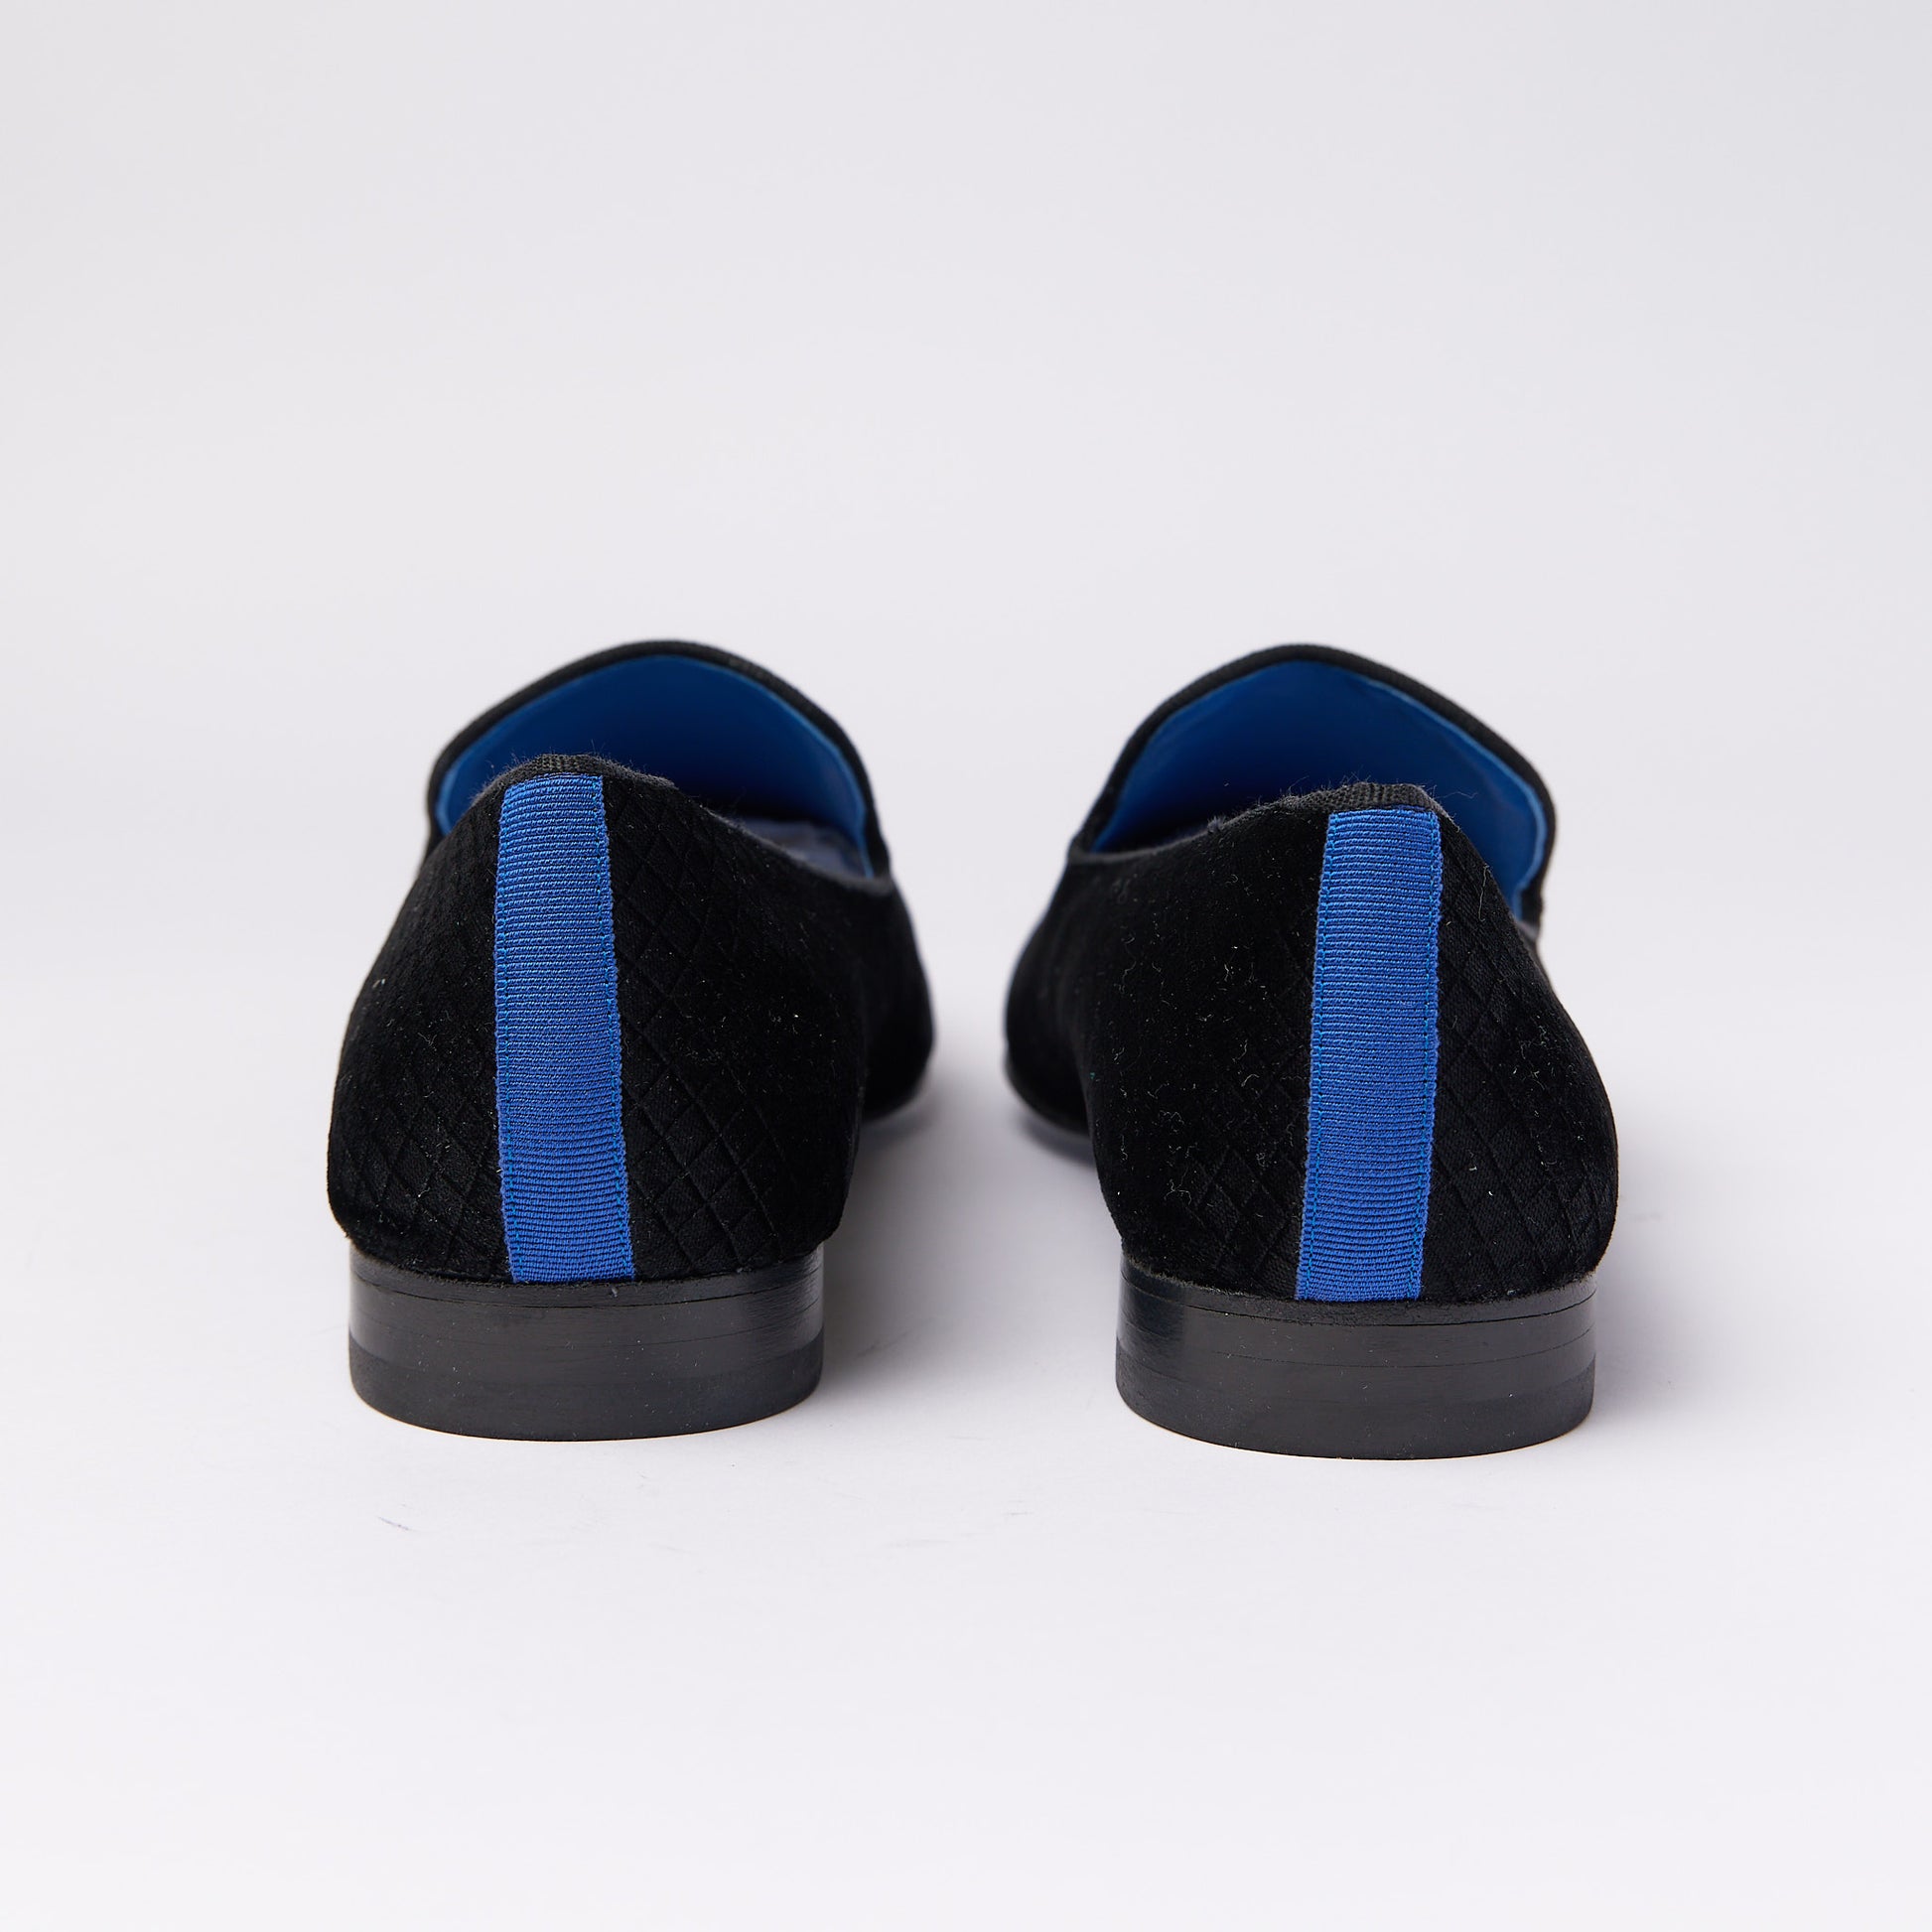 Louis Vuitton Navy Blue Suede Logo Smoking Slippers Size 42.5